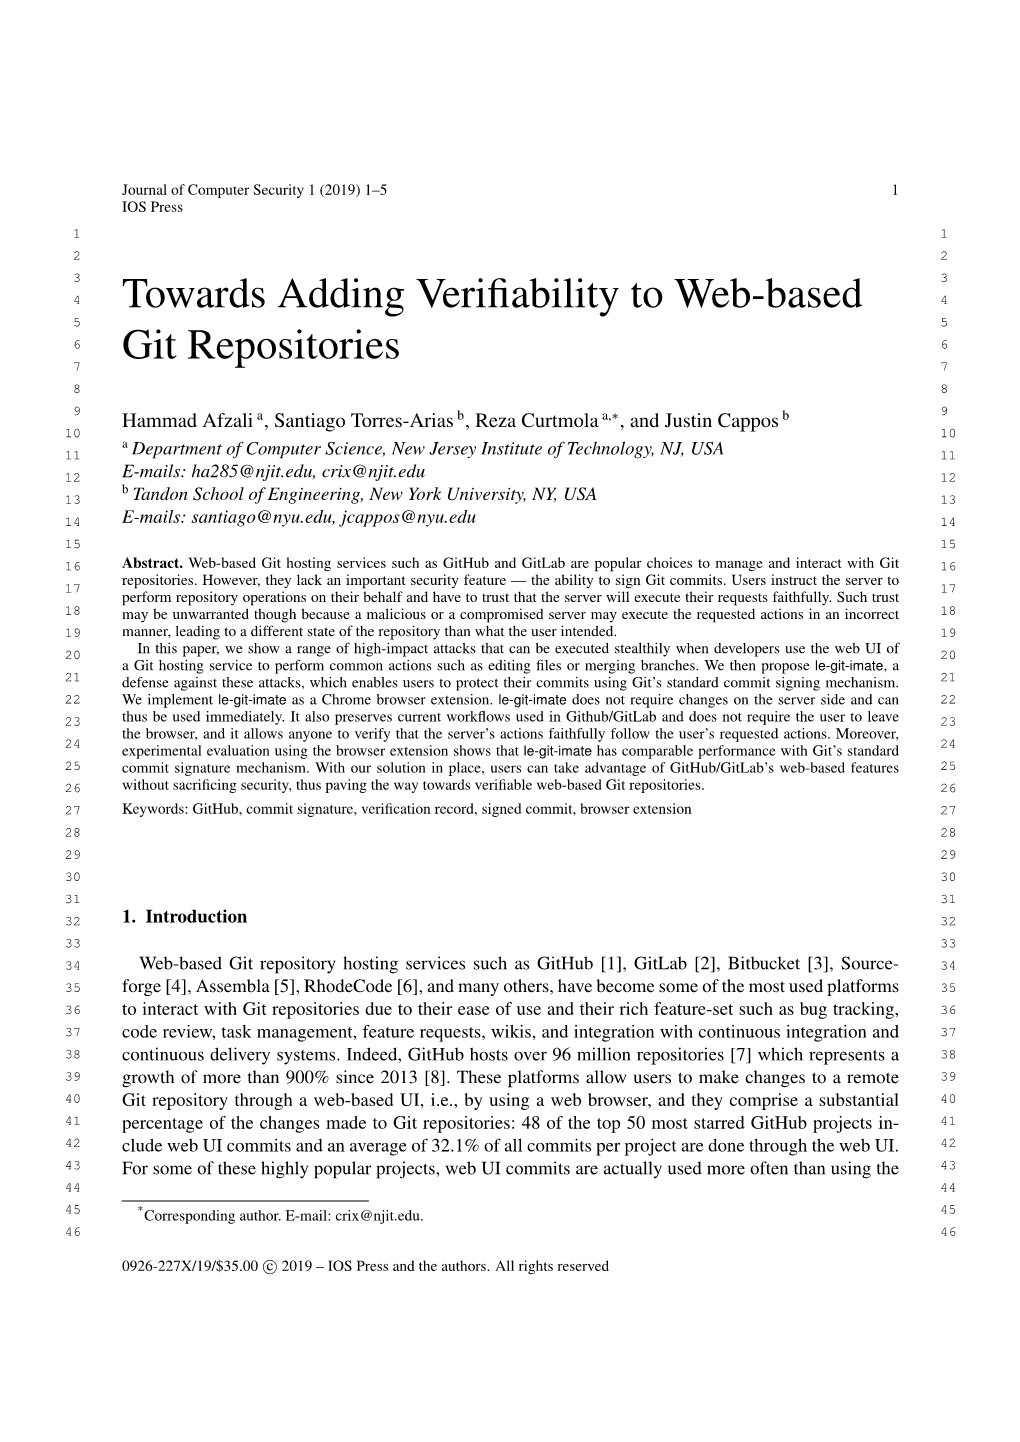 Towards Adding Verifiability to Web-Based Git Repositories